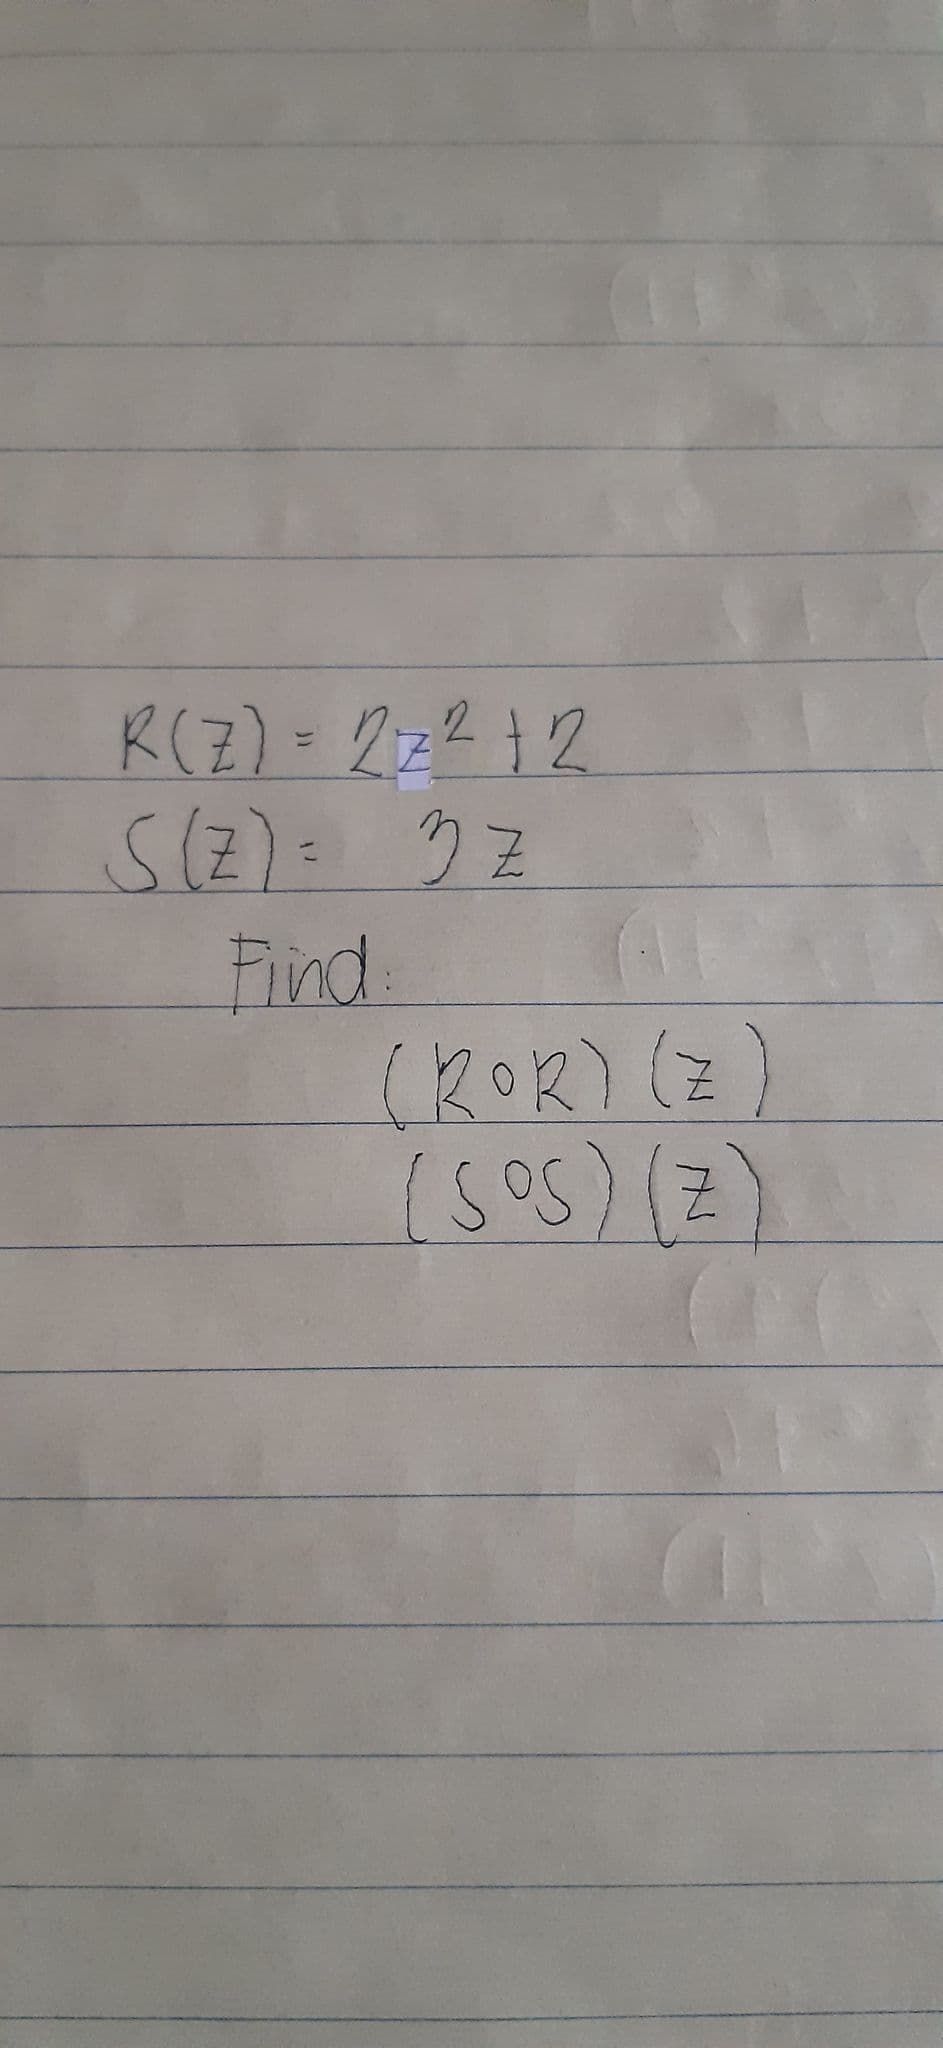 R(Z) = 22212
Find
(ROR) (2)
15os)()
